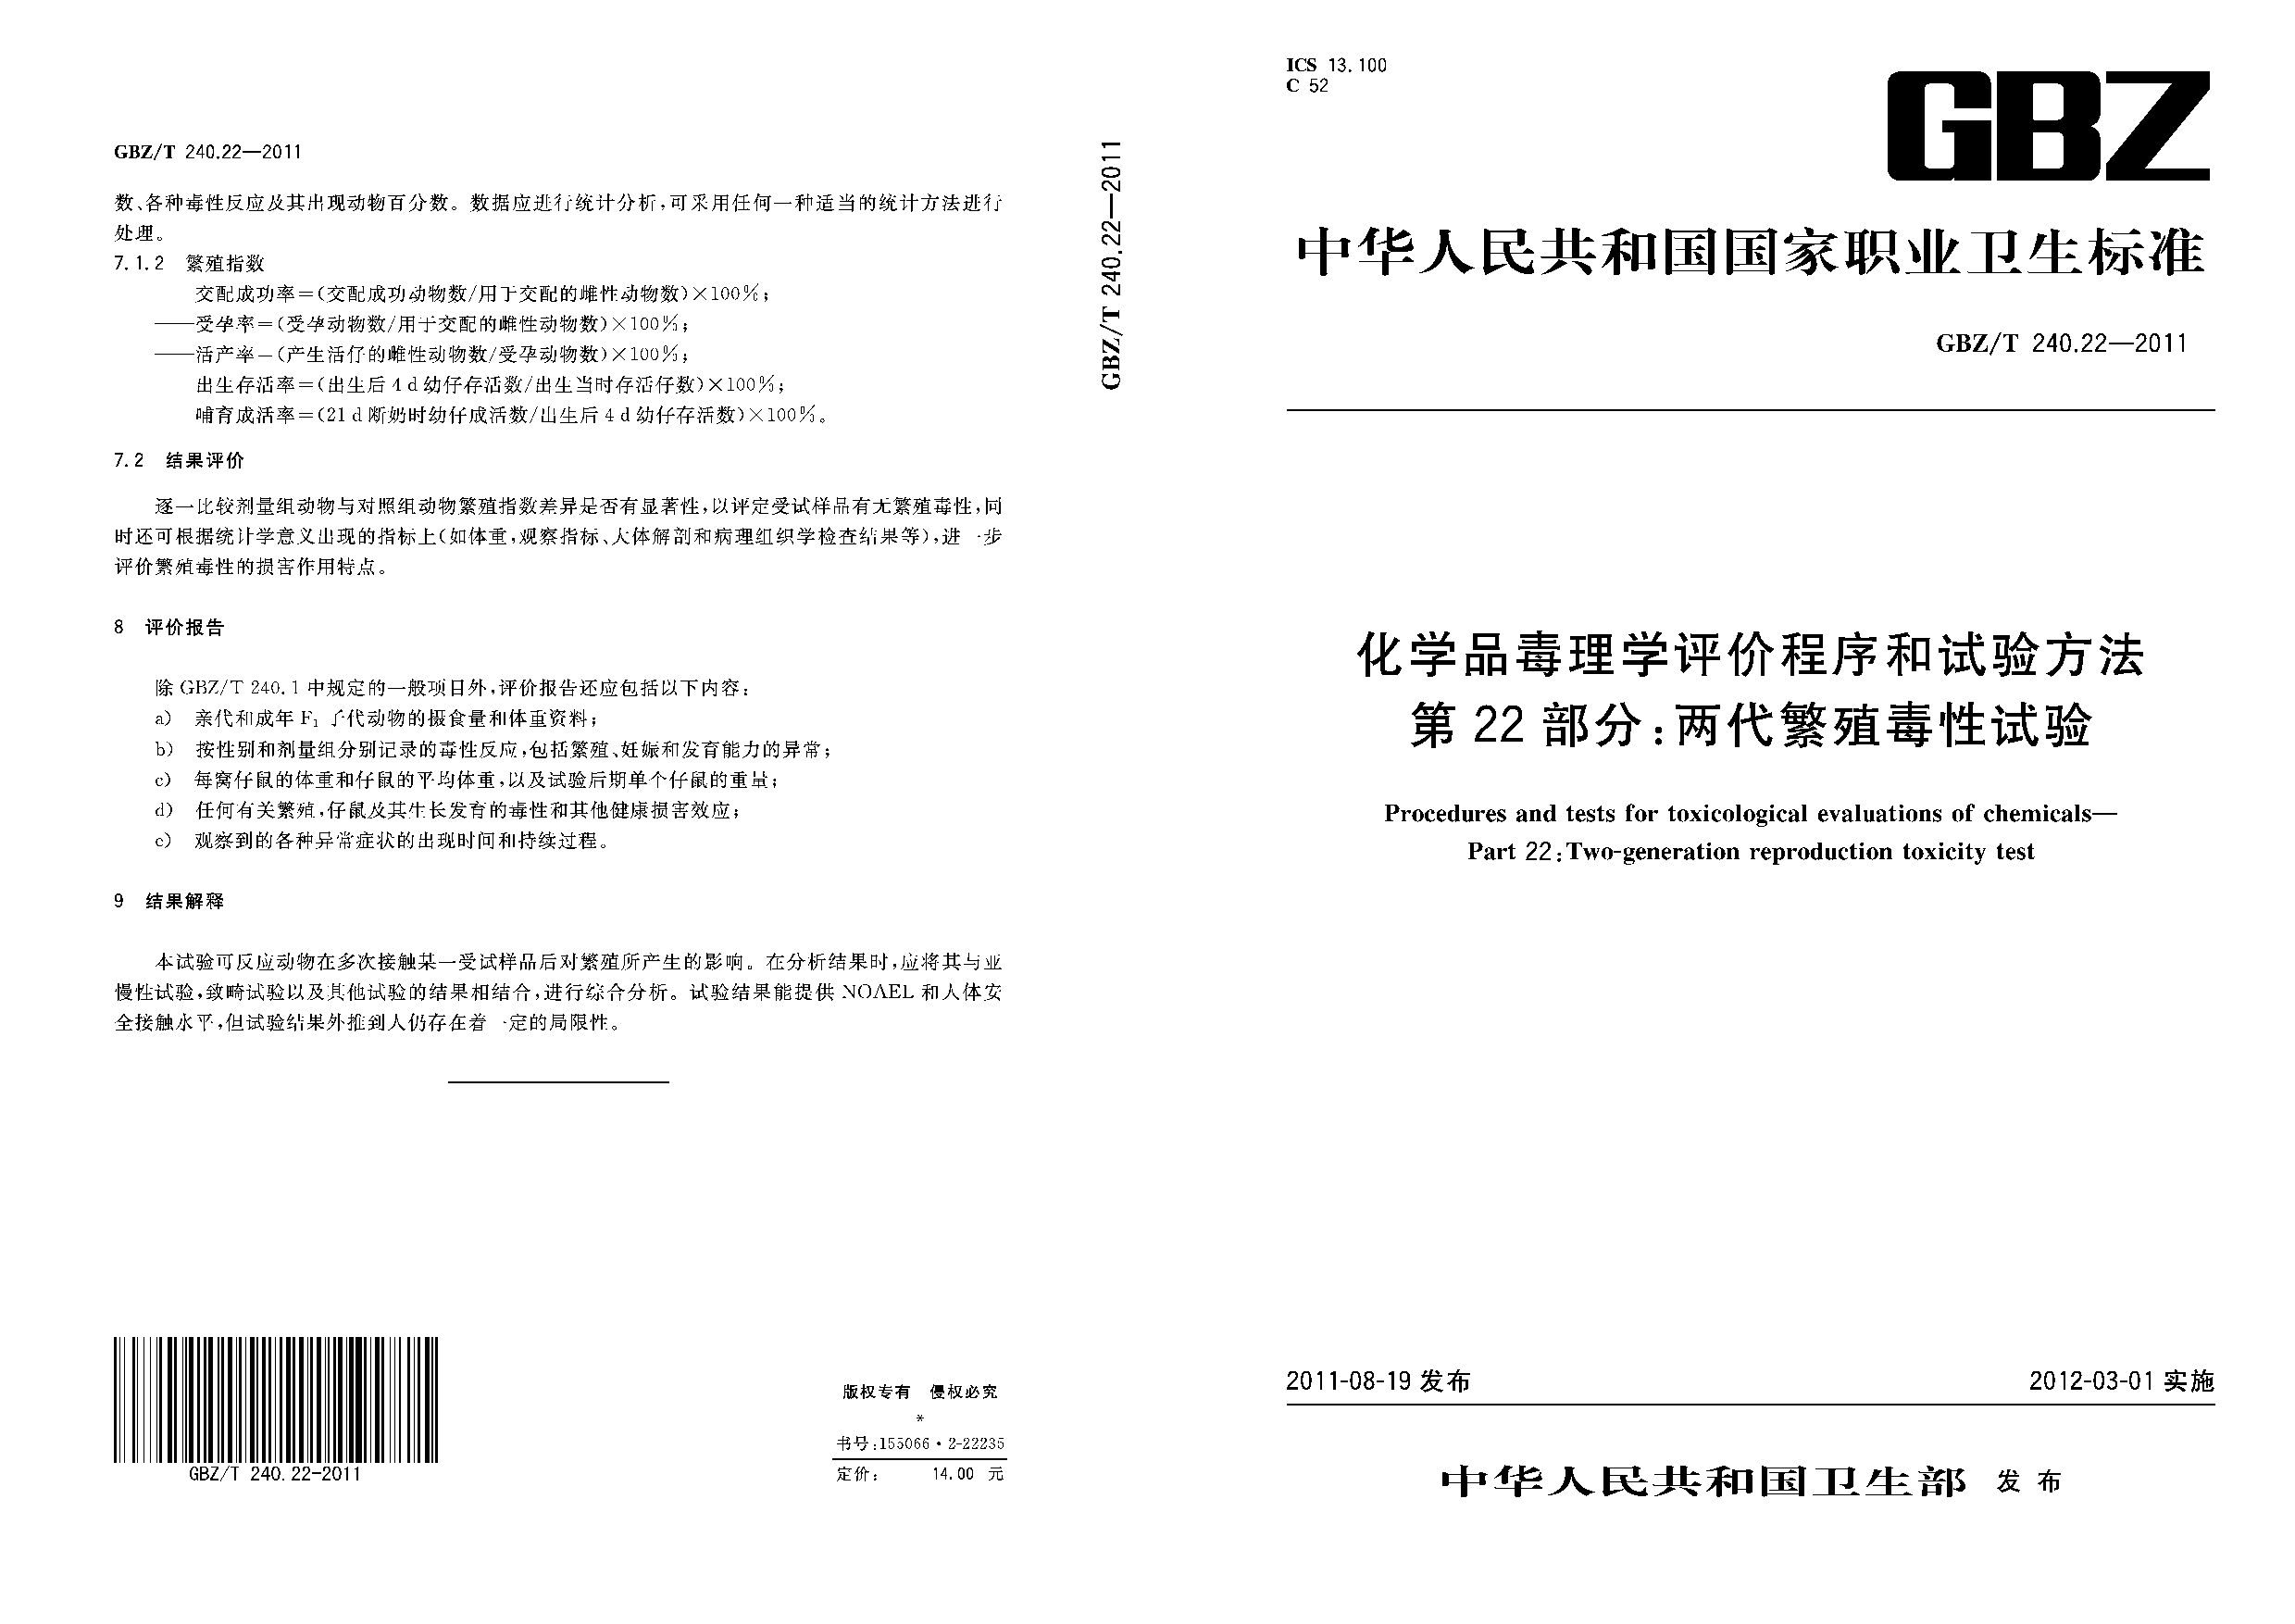 GBZ/T 240.22-2011封面图